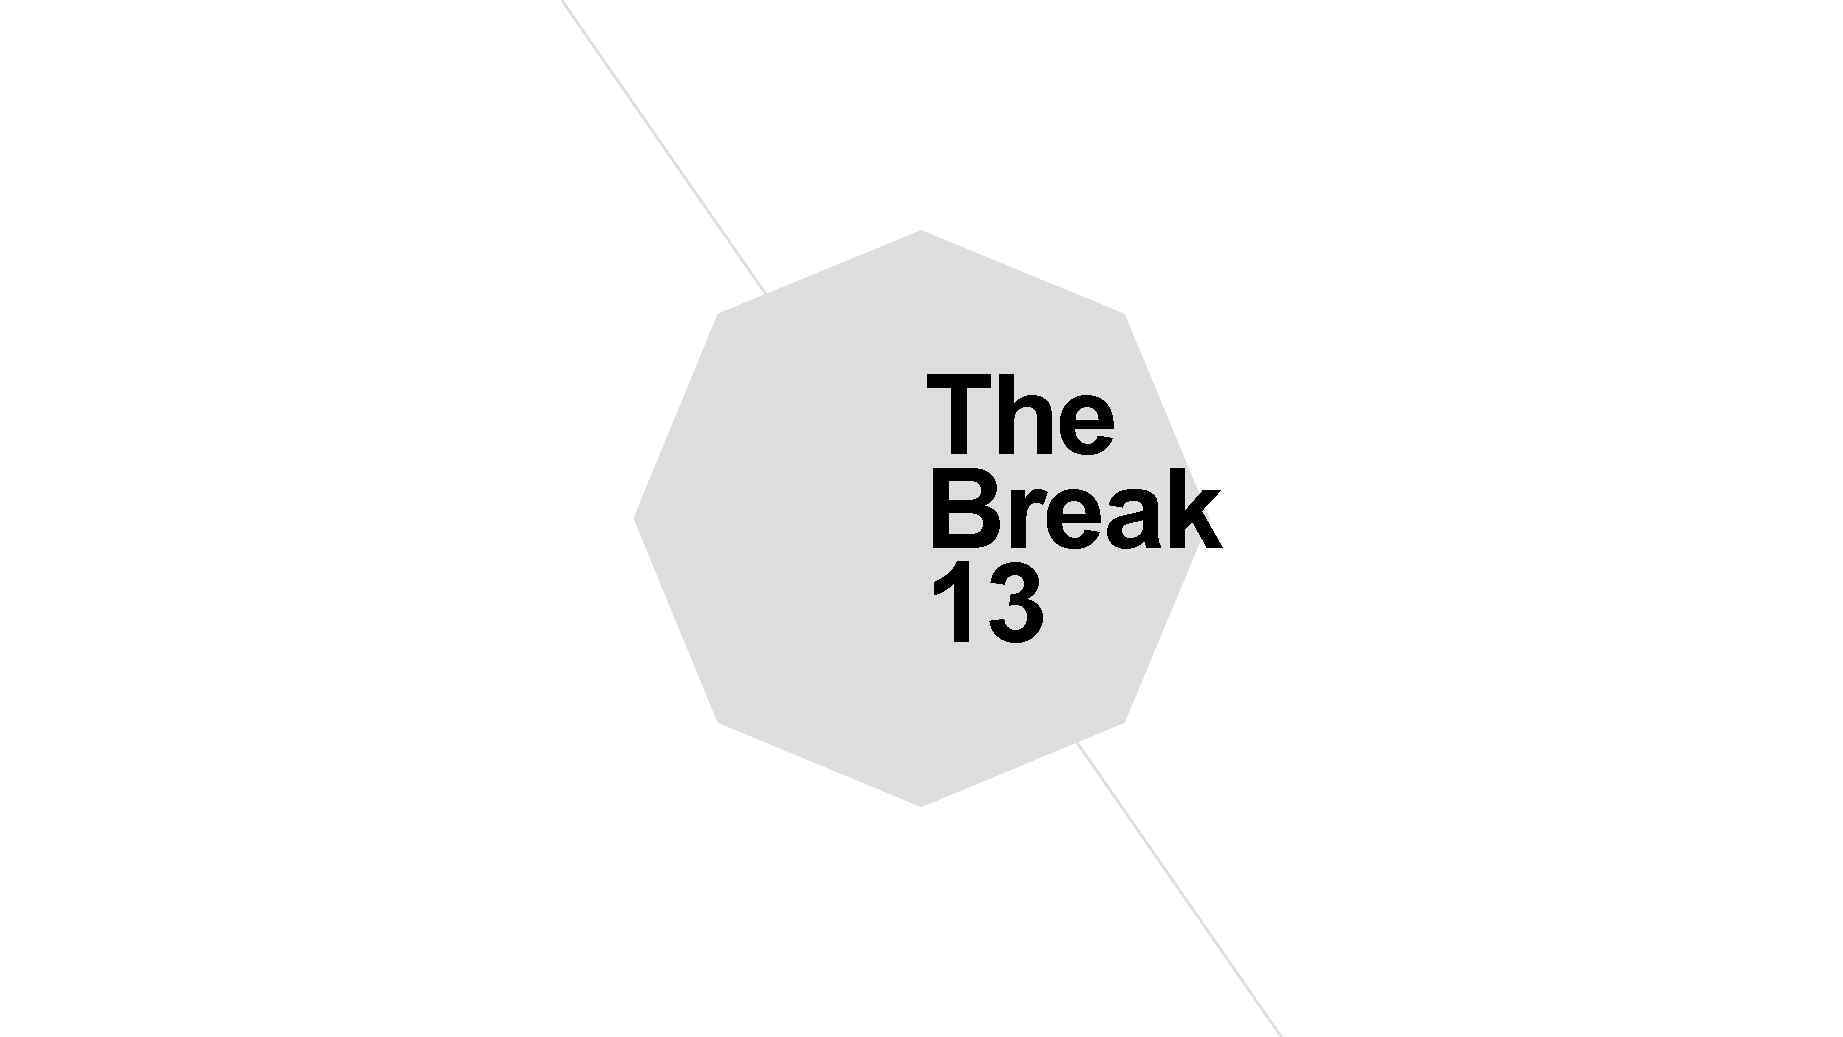 The Break 13 